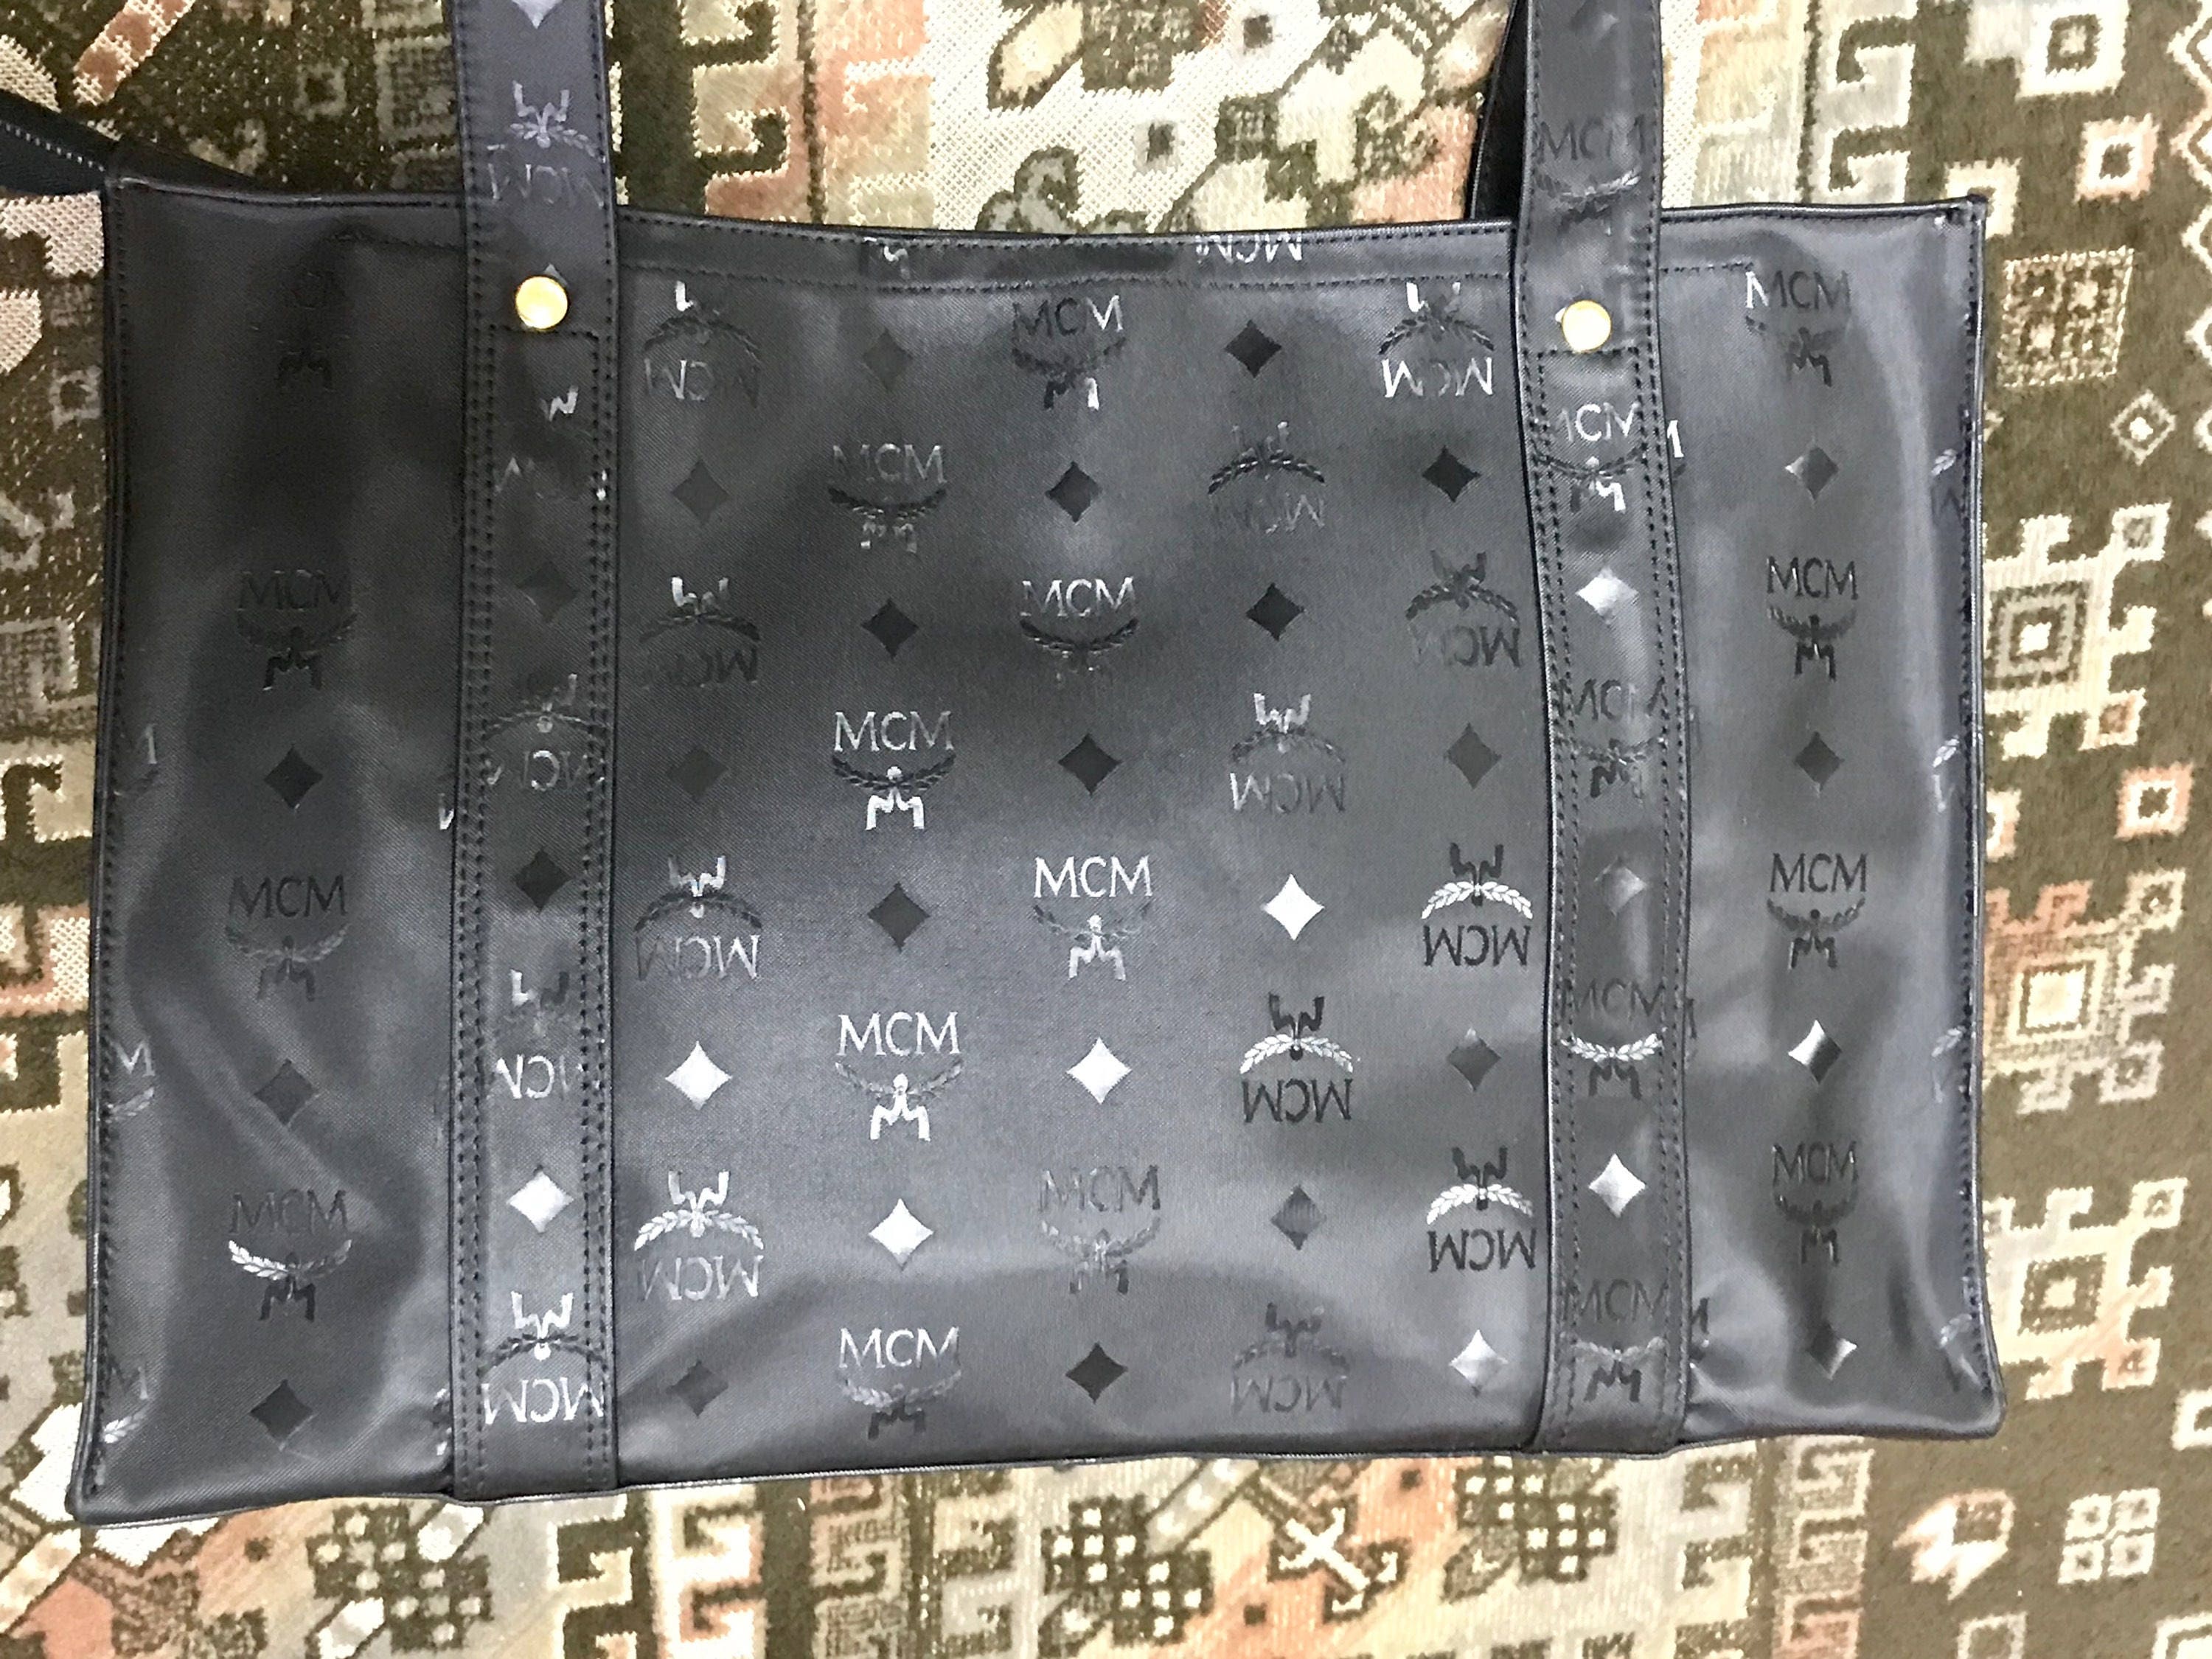 Mint. Vintage Mcm Black Monogram Large Shopper Tote Bag, Shoulder Bag. Unisex Use As Classic Style in originality. Handmade in Germany